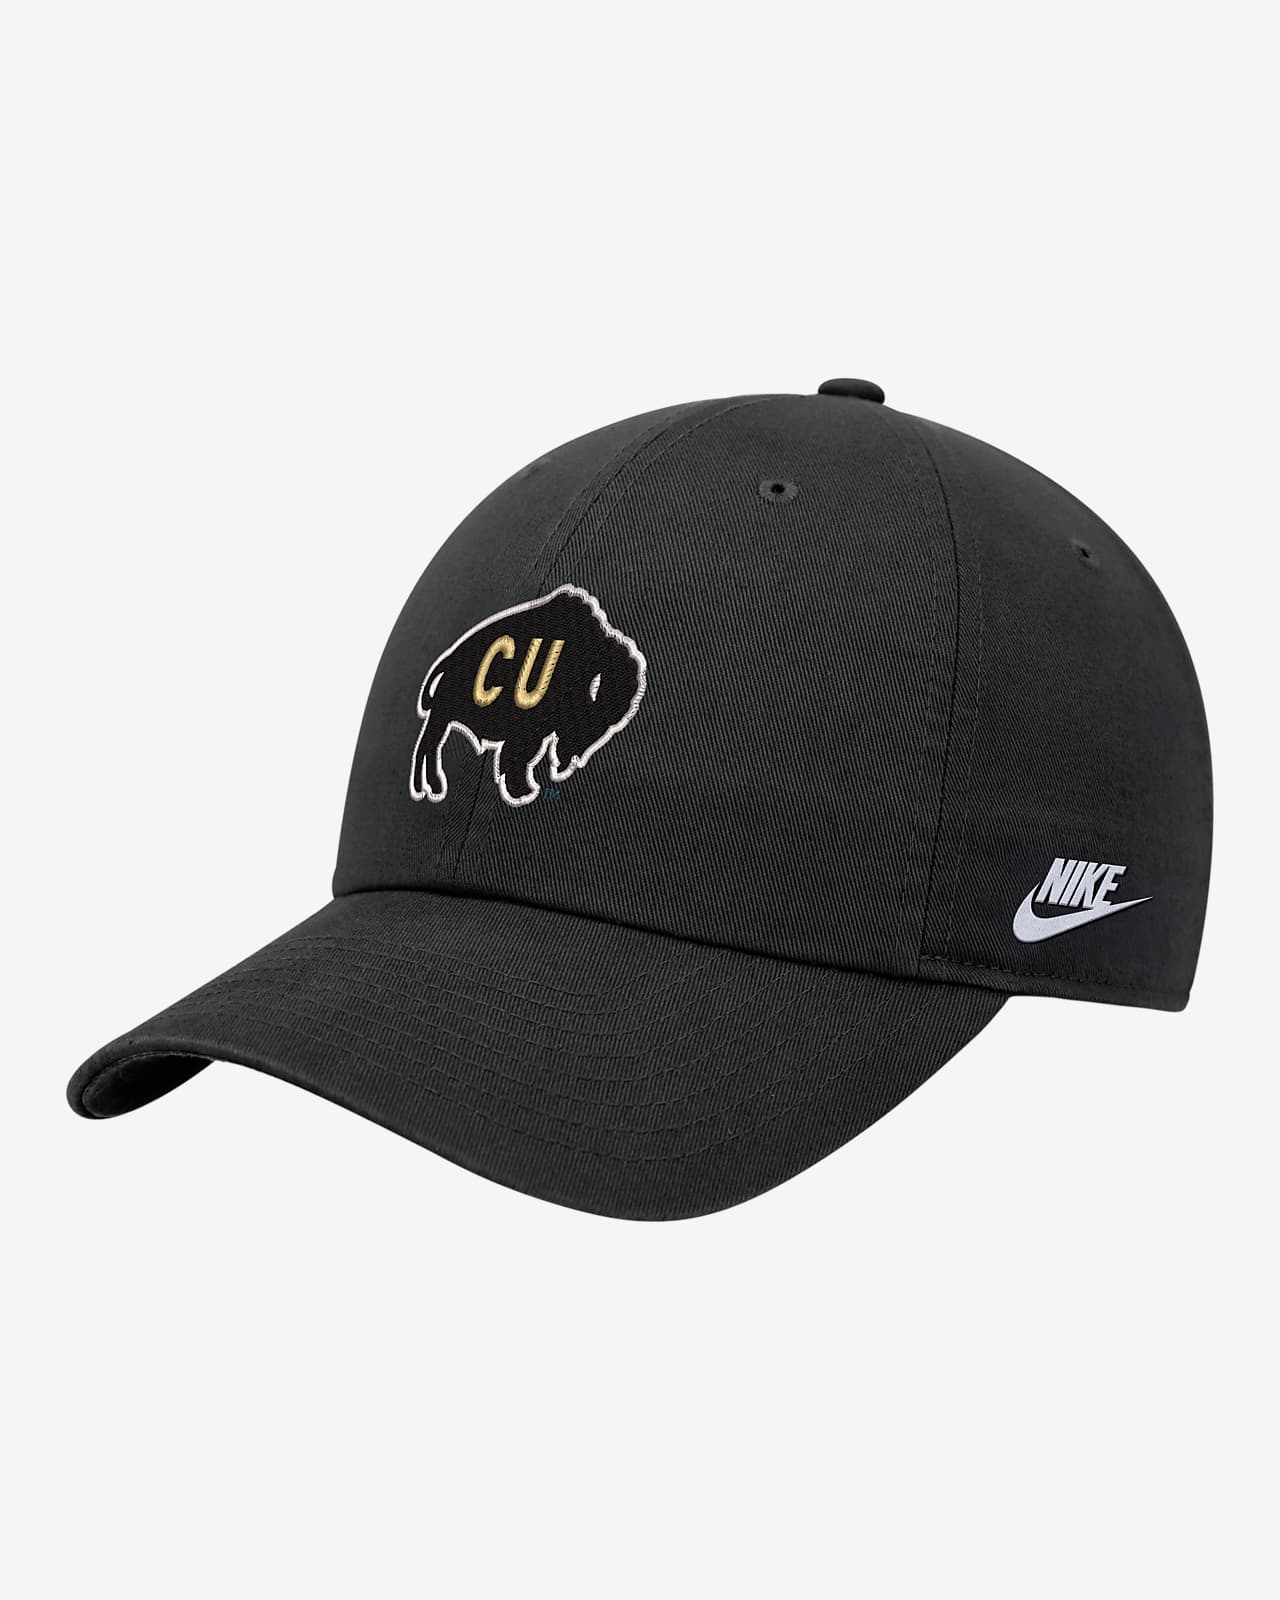 Colorado Nike College Cap